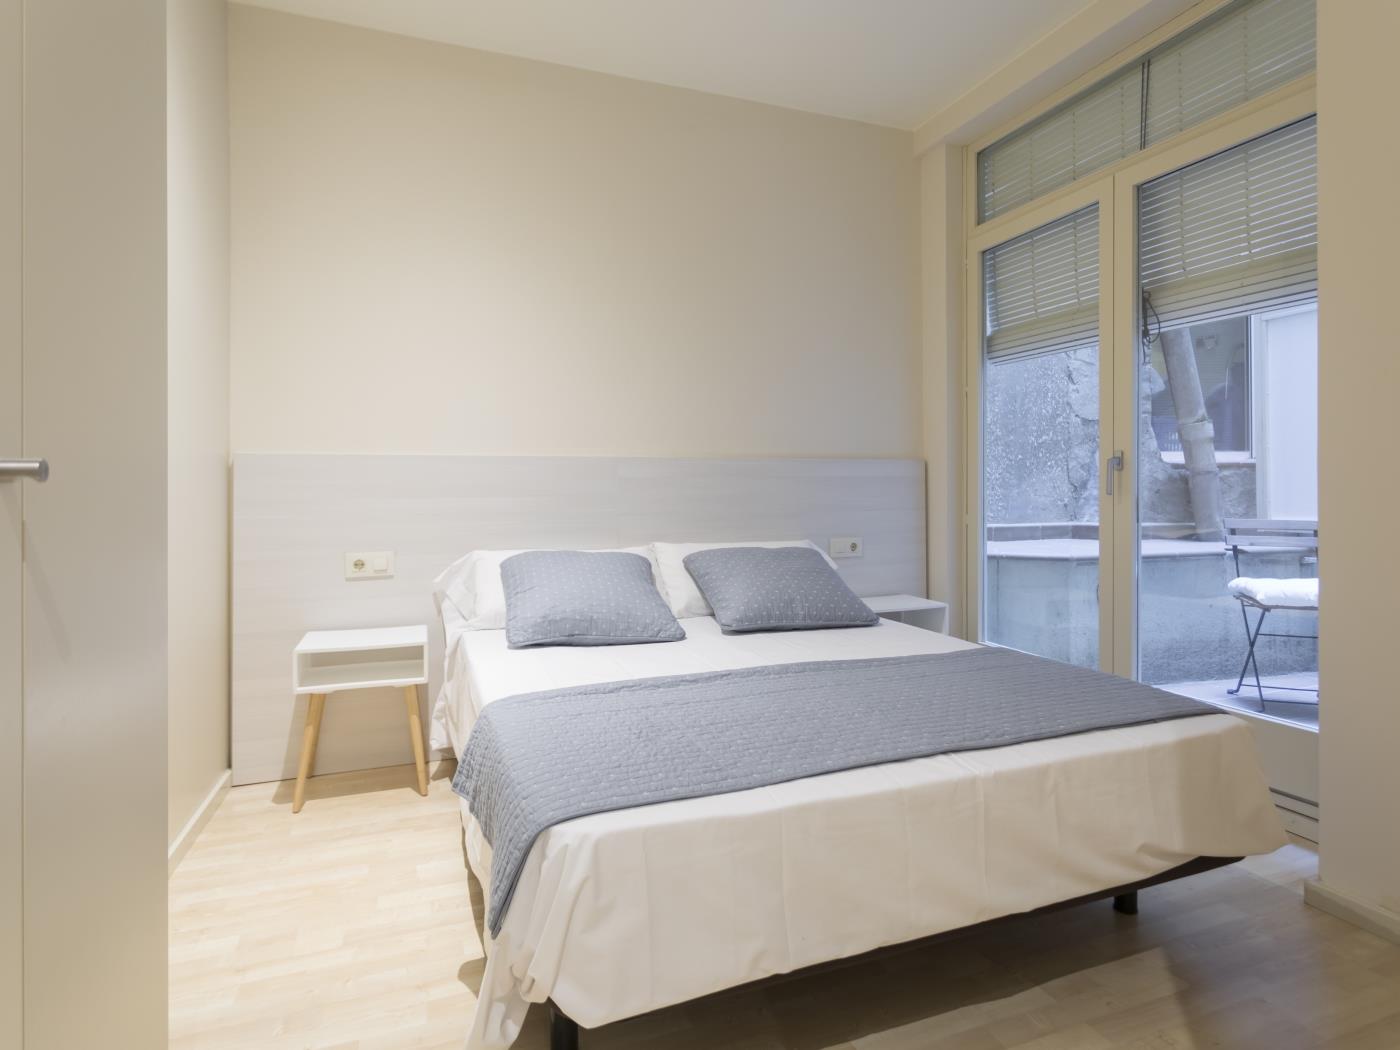 Bravissimo Cort Reial 1B, atractivo apartamento en Girona